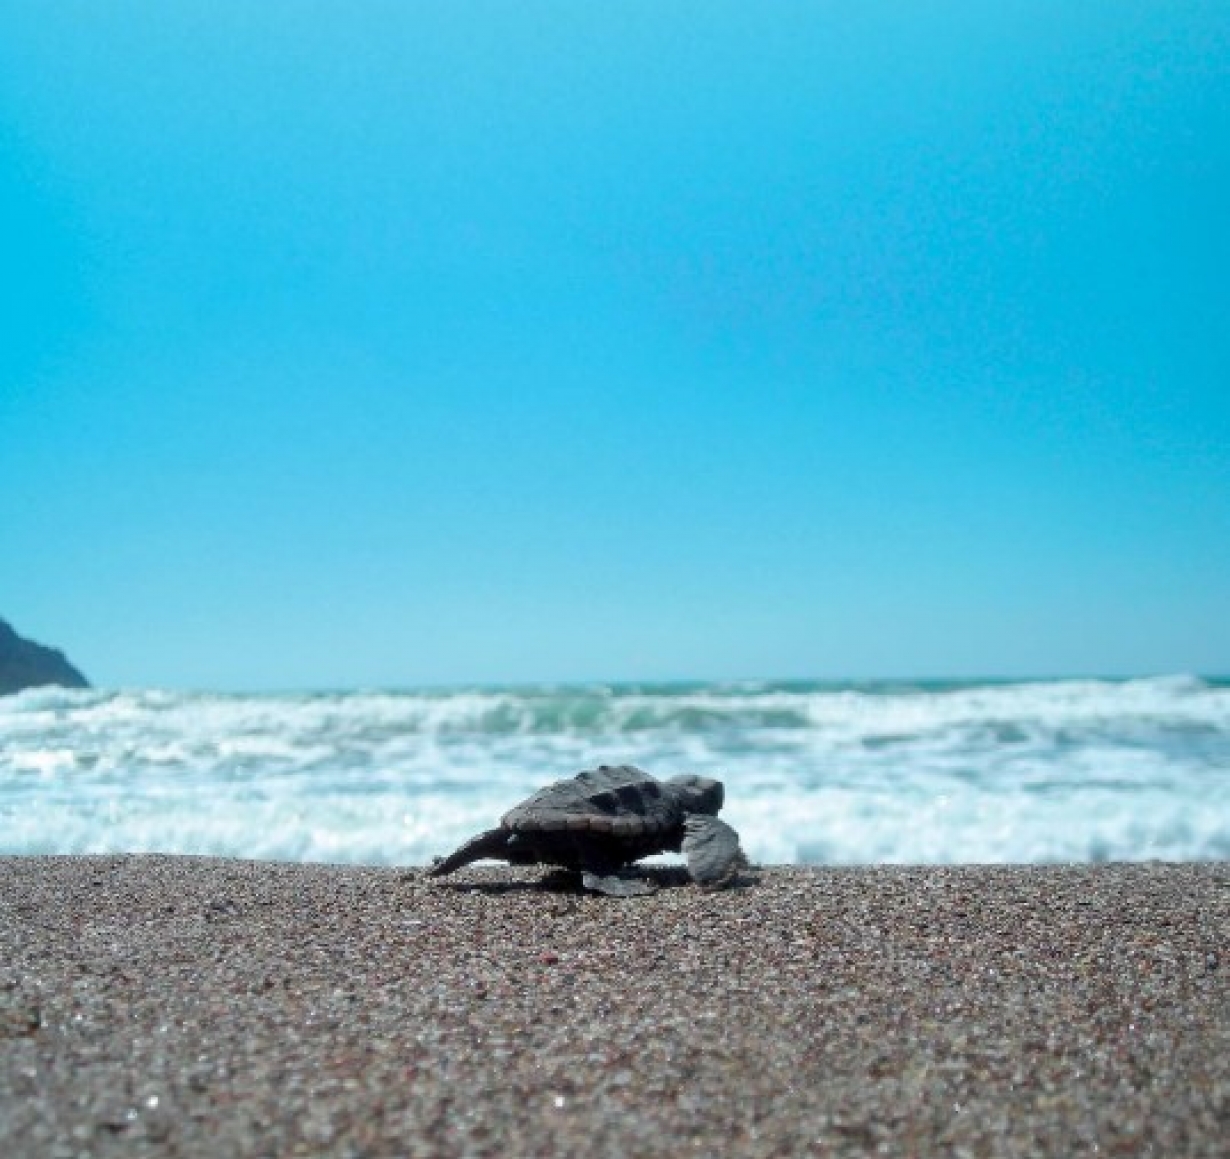 Conservation of Marine Turtles in the Mediterranean Sea